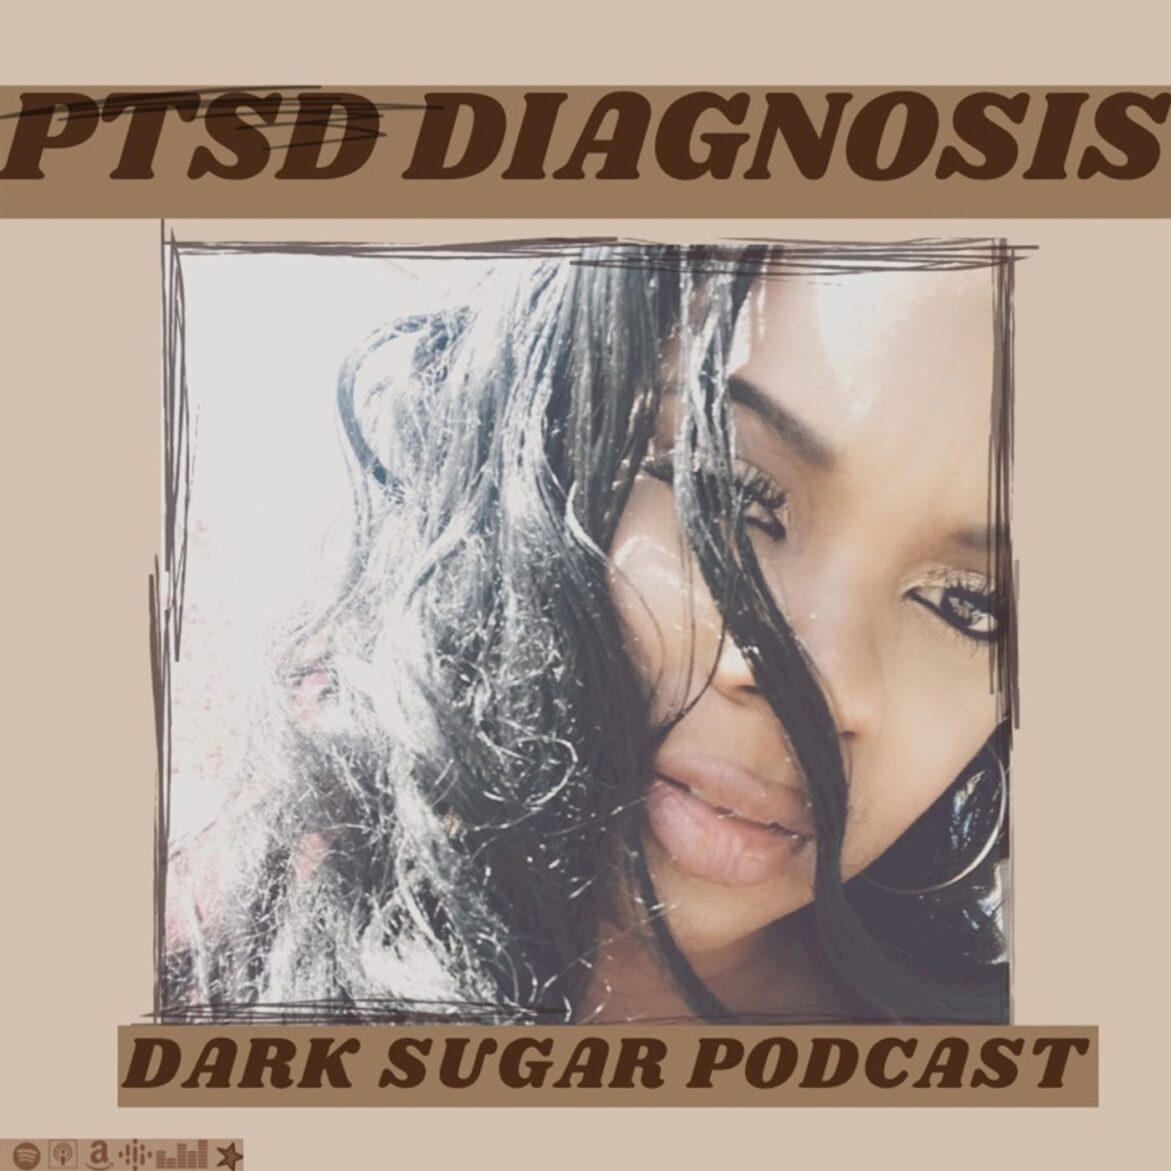 Black Podcasting - PTSD DIAGNOSIS